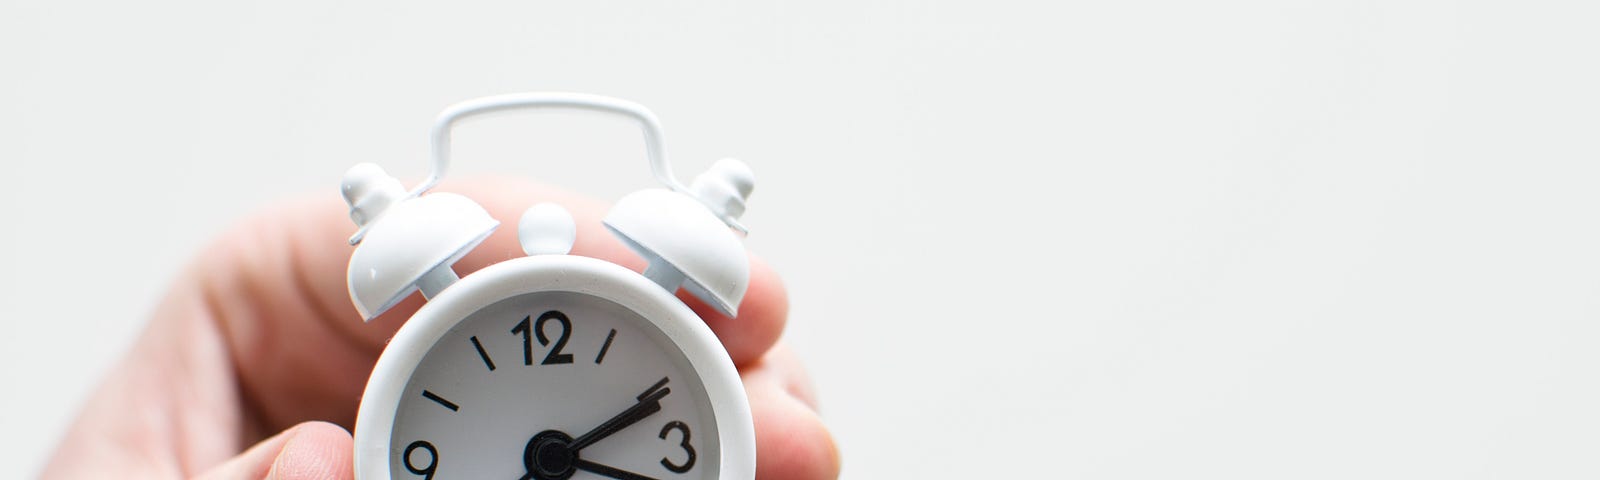 Django postgreSQL Time with Time Zone